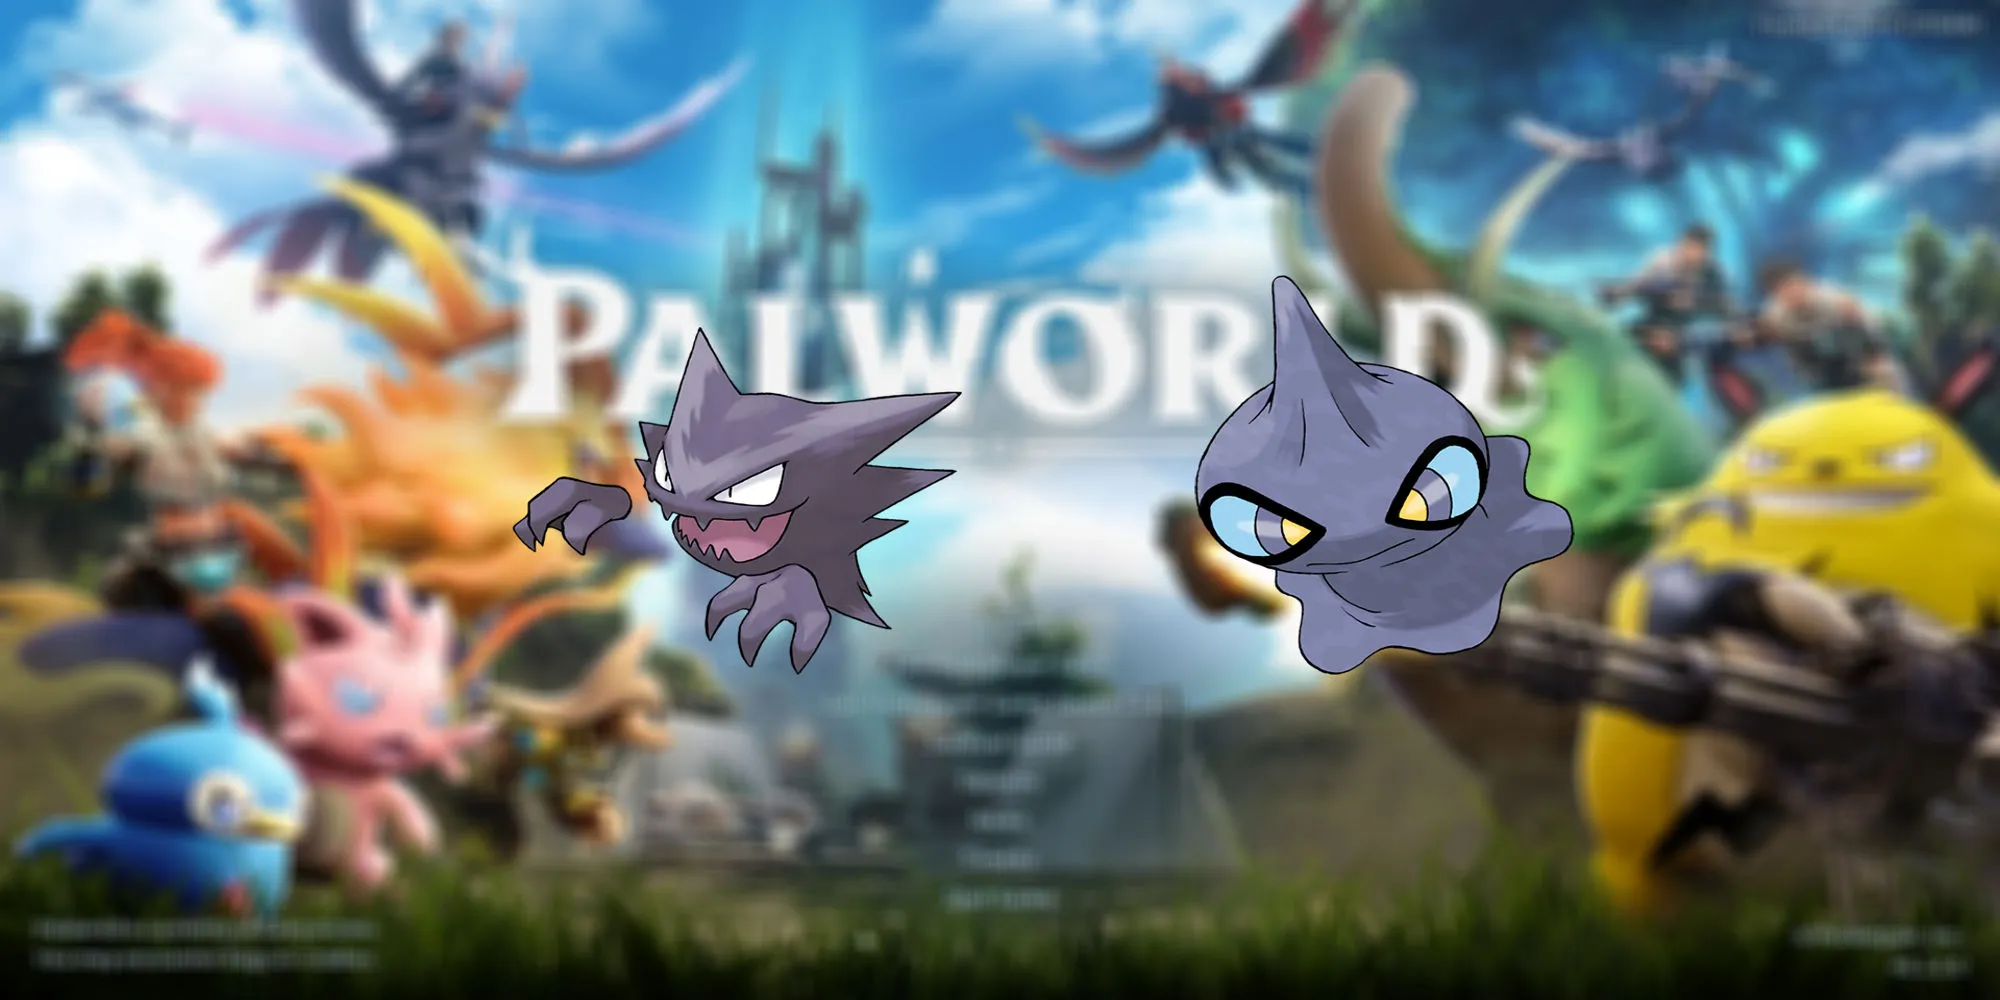 Palworld中可能适用的暗影属性Pokemon：鬼斯和咒怨